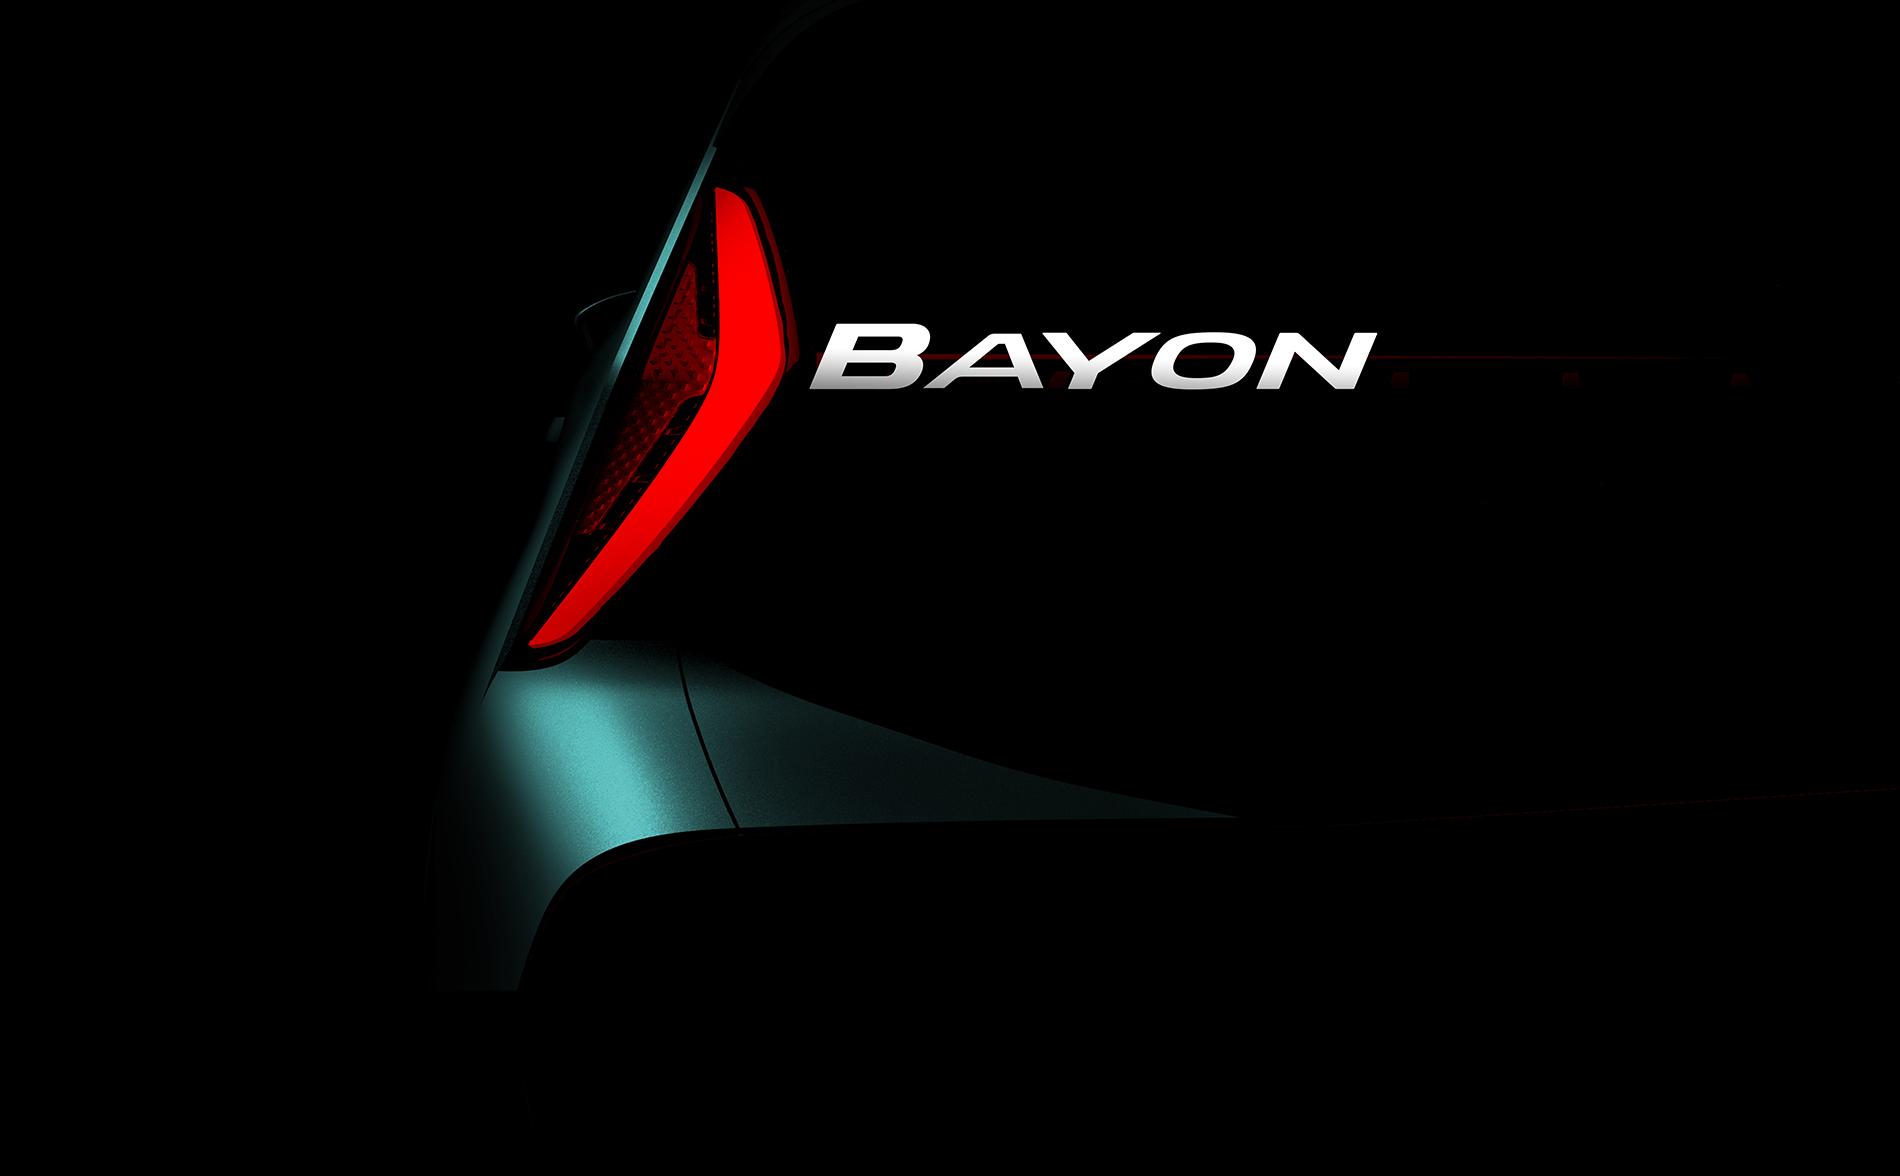 Hyundai zdradza nazwę nowego SUV-a - Hyundai Bayon